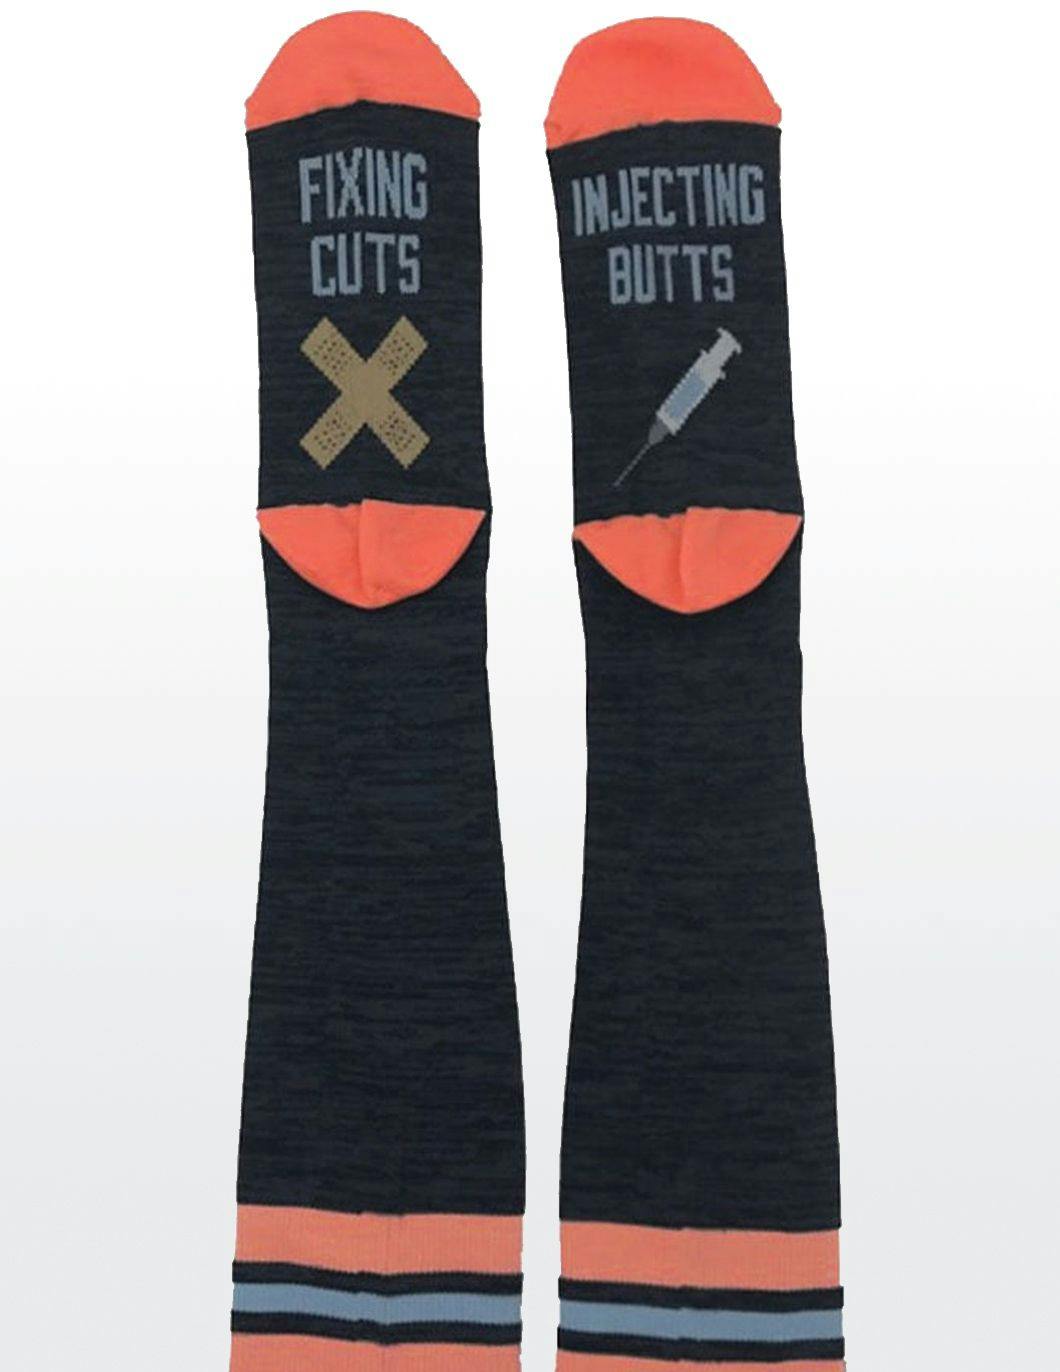 doctors-choice-compression-socks-10-18-mmhg-fixing-cuts-print-alt